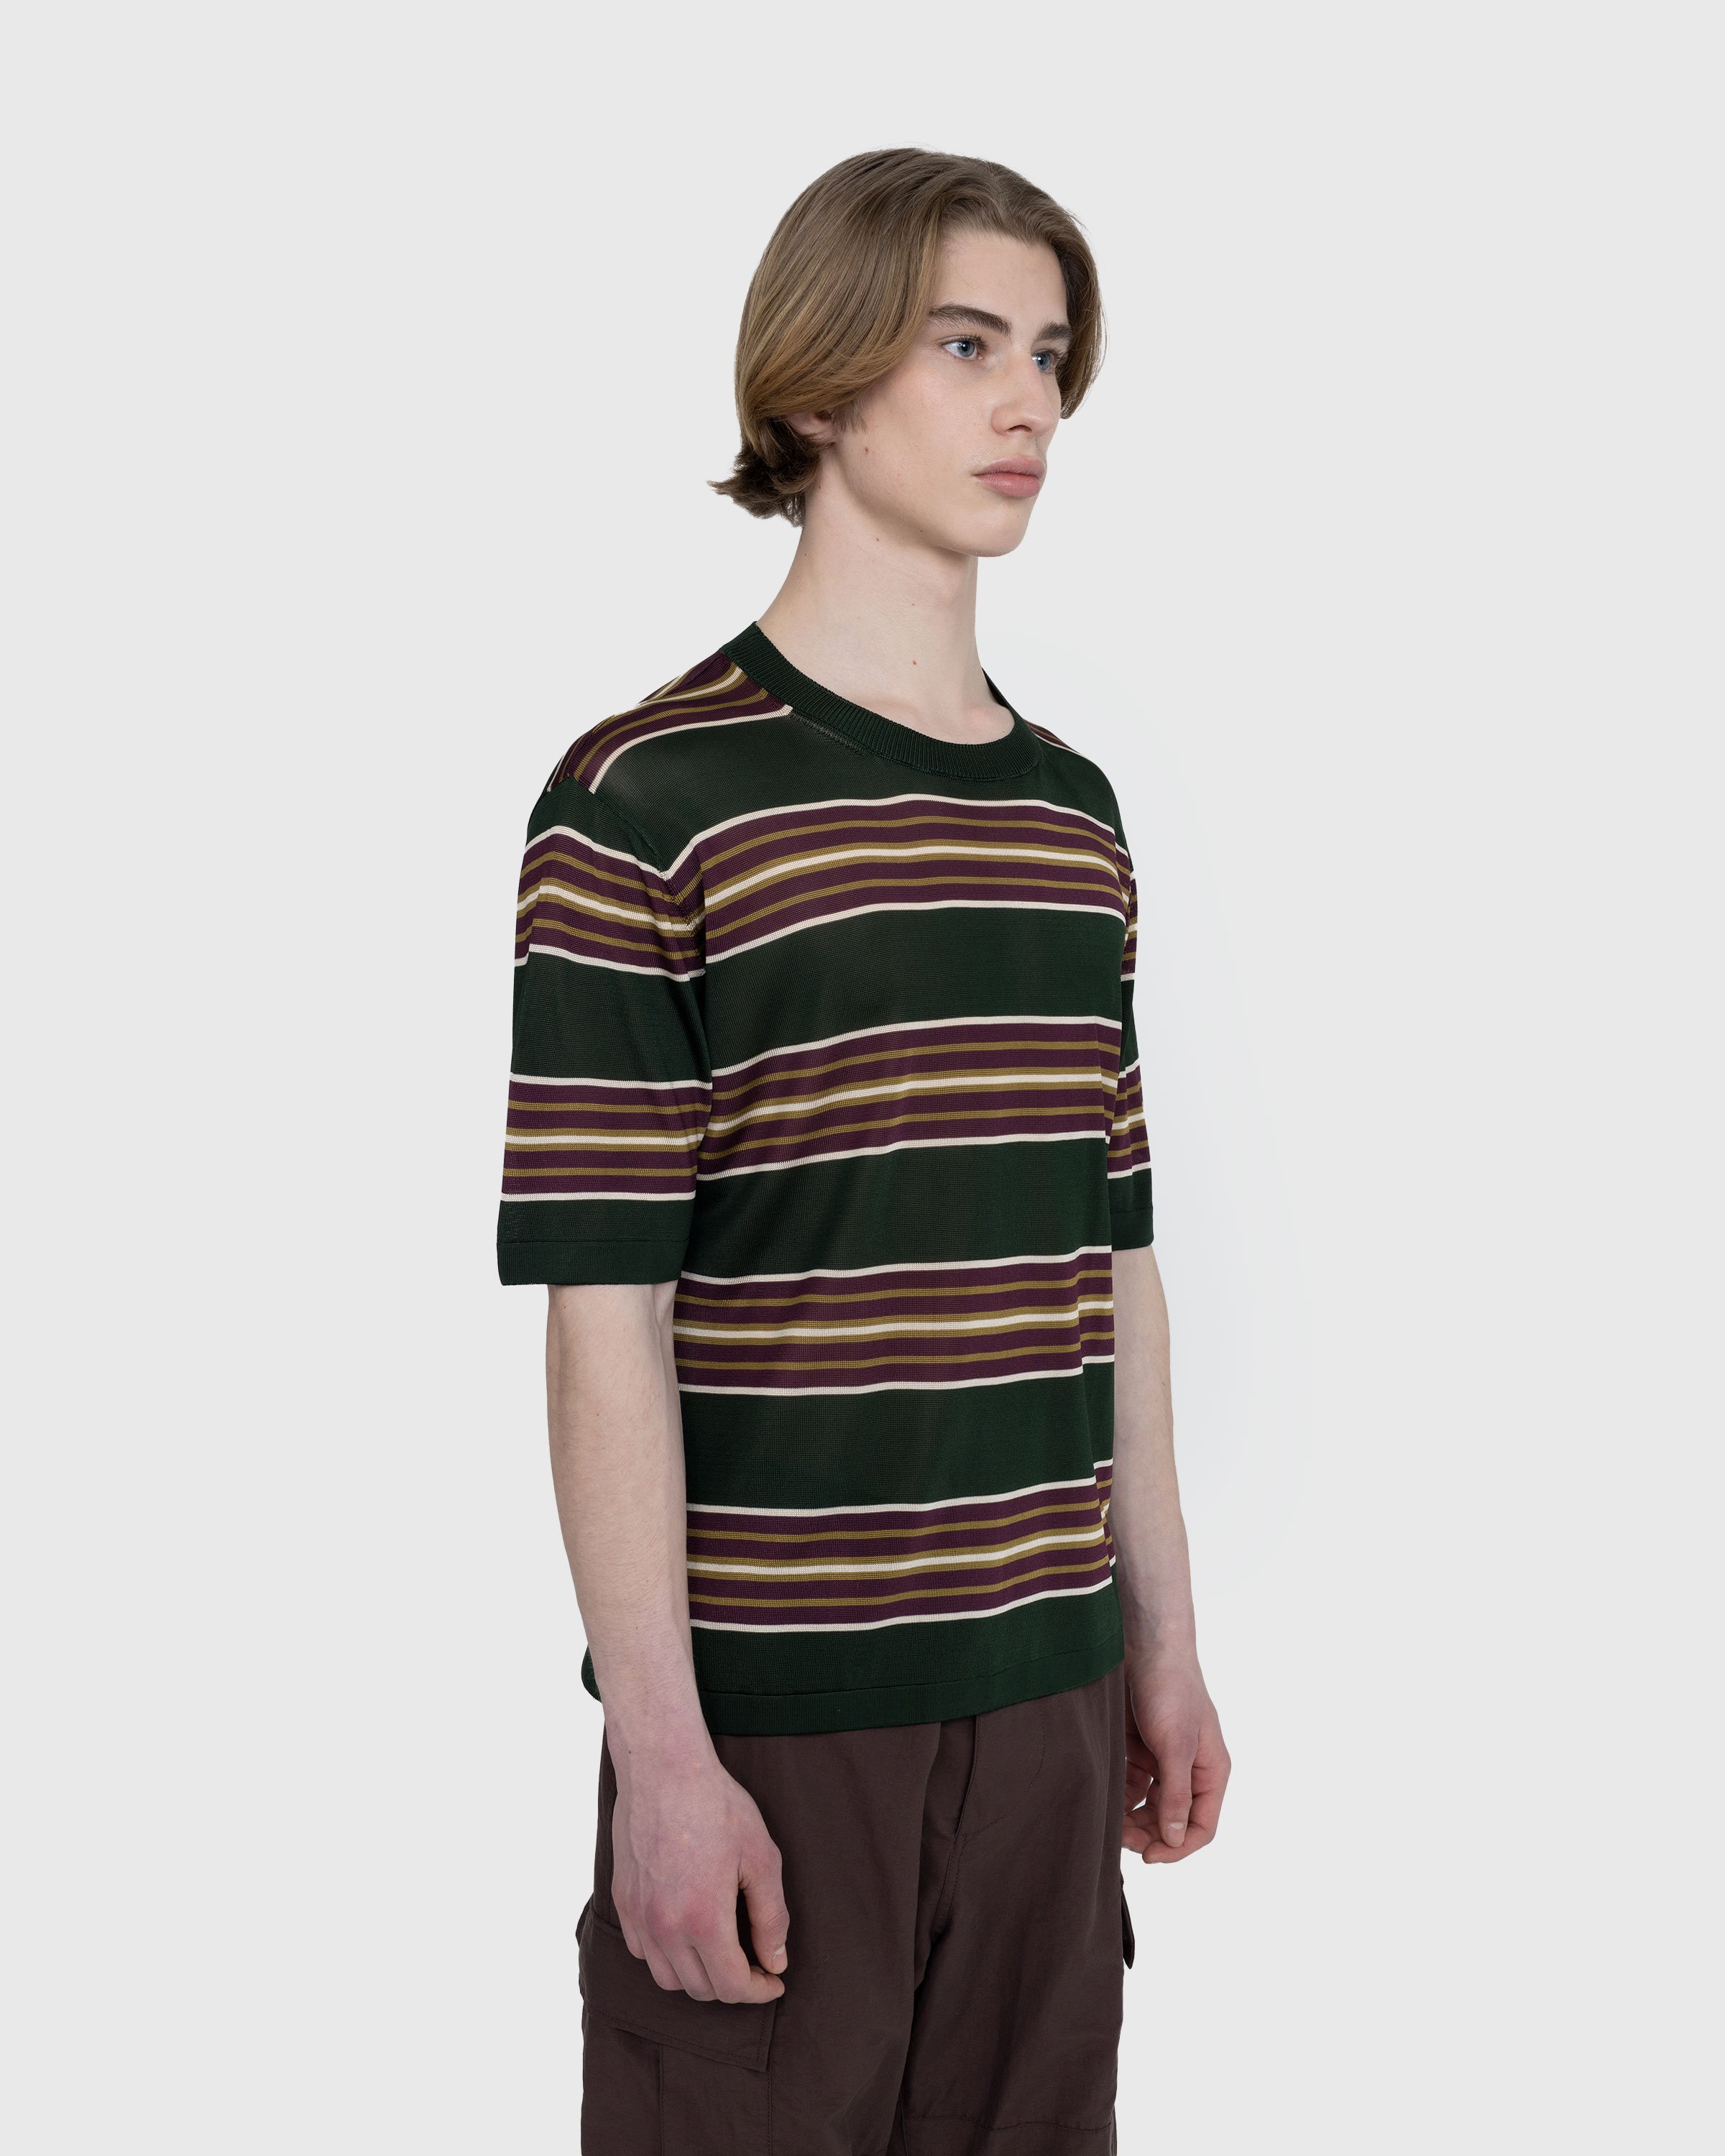 Dries van Noten - Mias Knit T-Shirt Bottle - Clothing - Green - Image 3